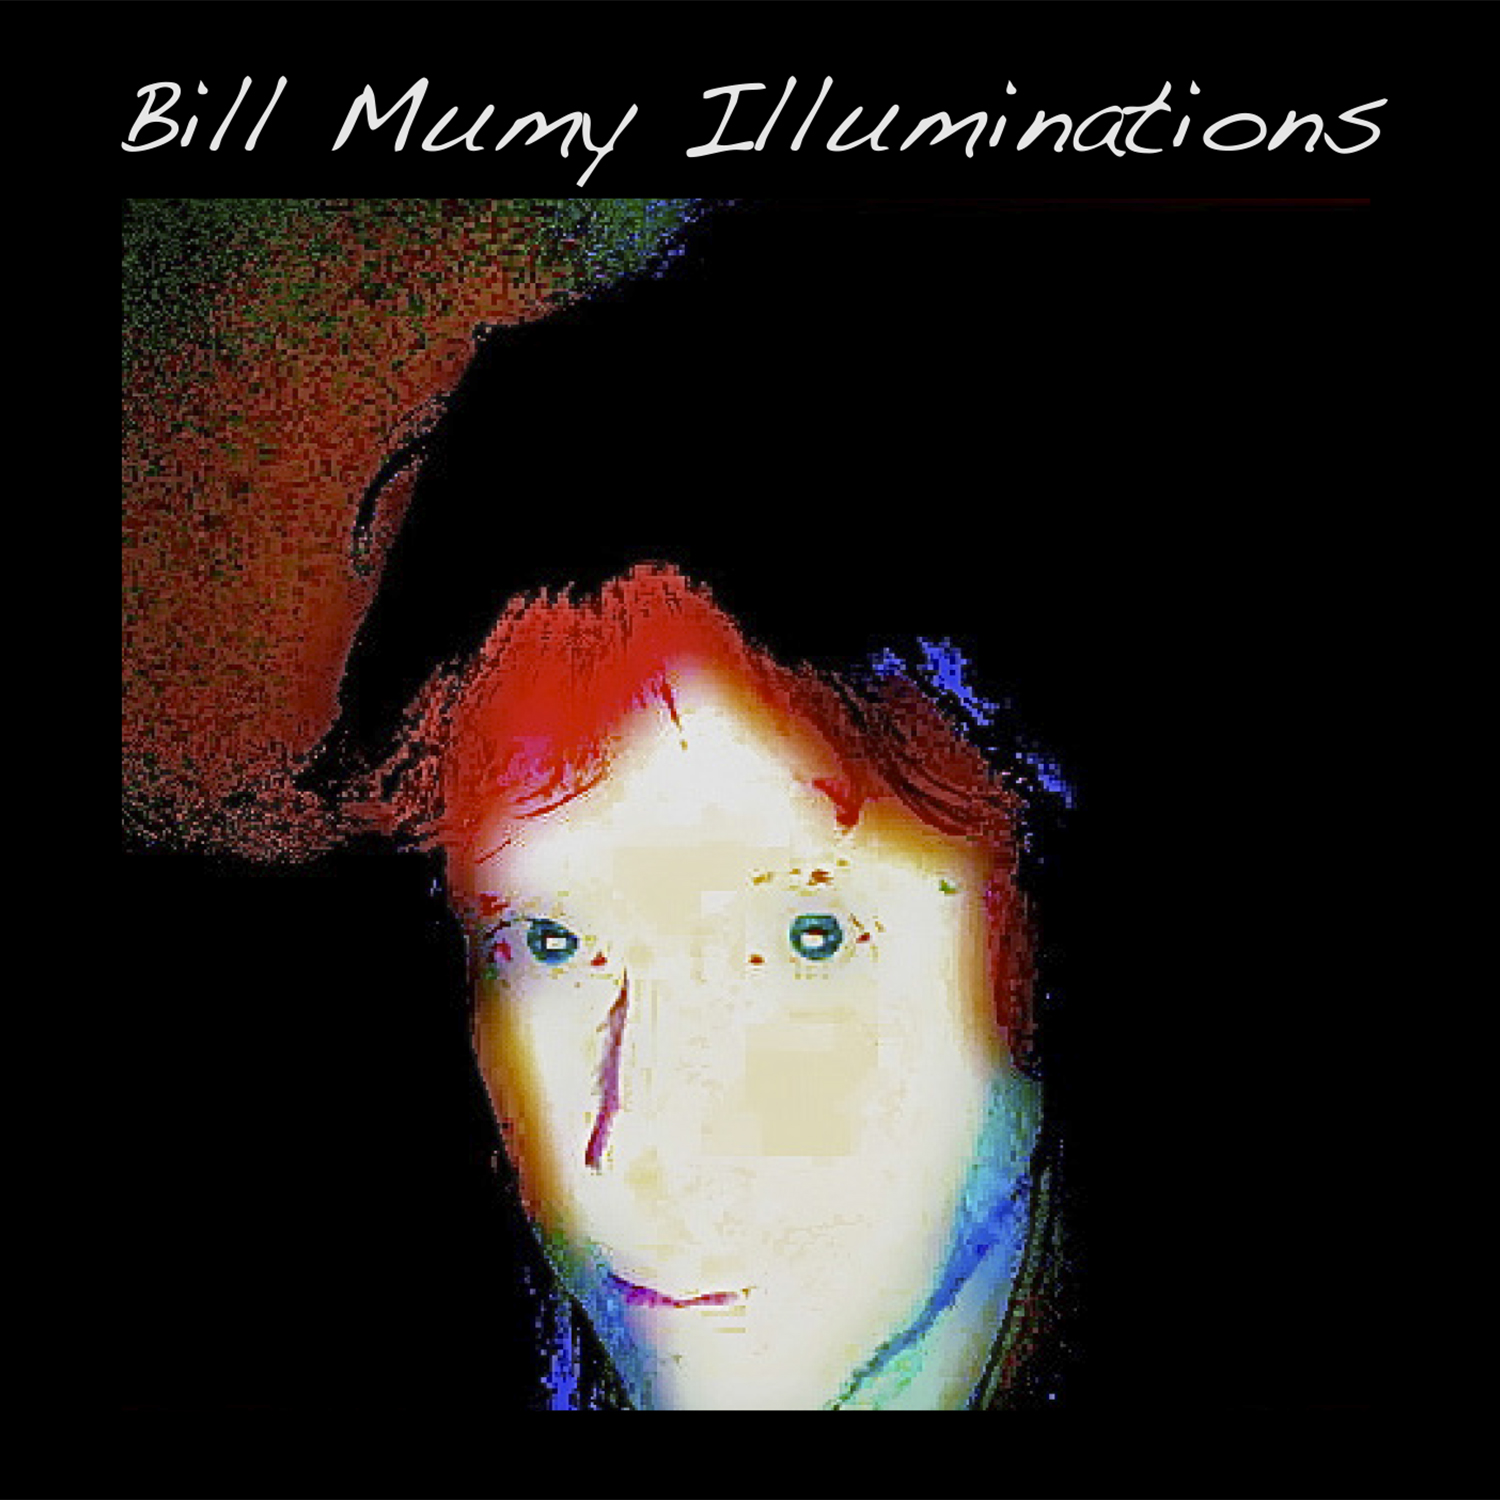 Bill Mumy Illuminates His Music Talents With New Album, Illuminations